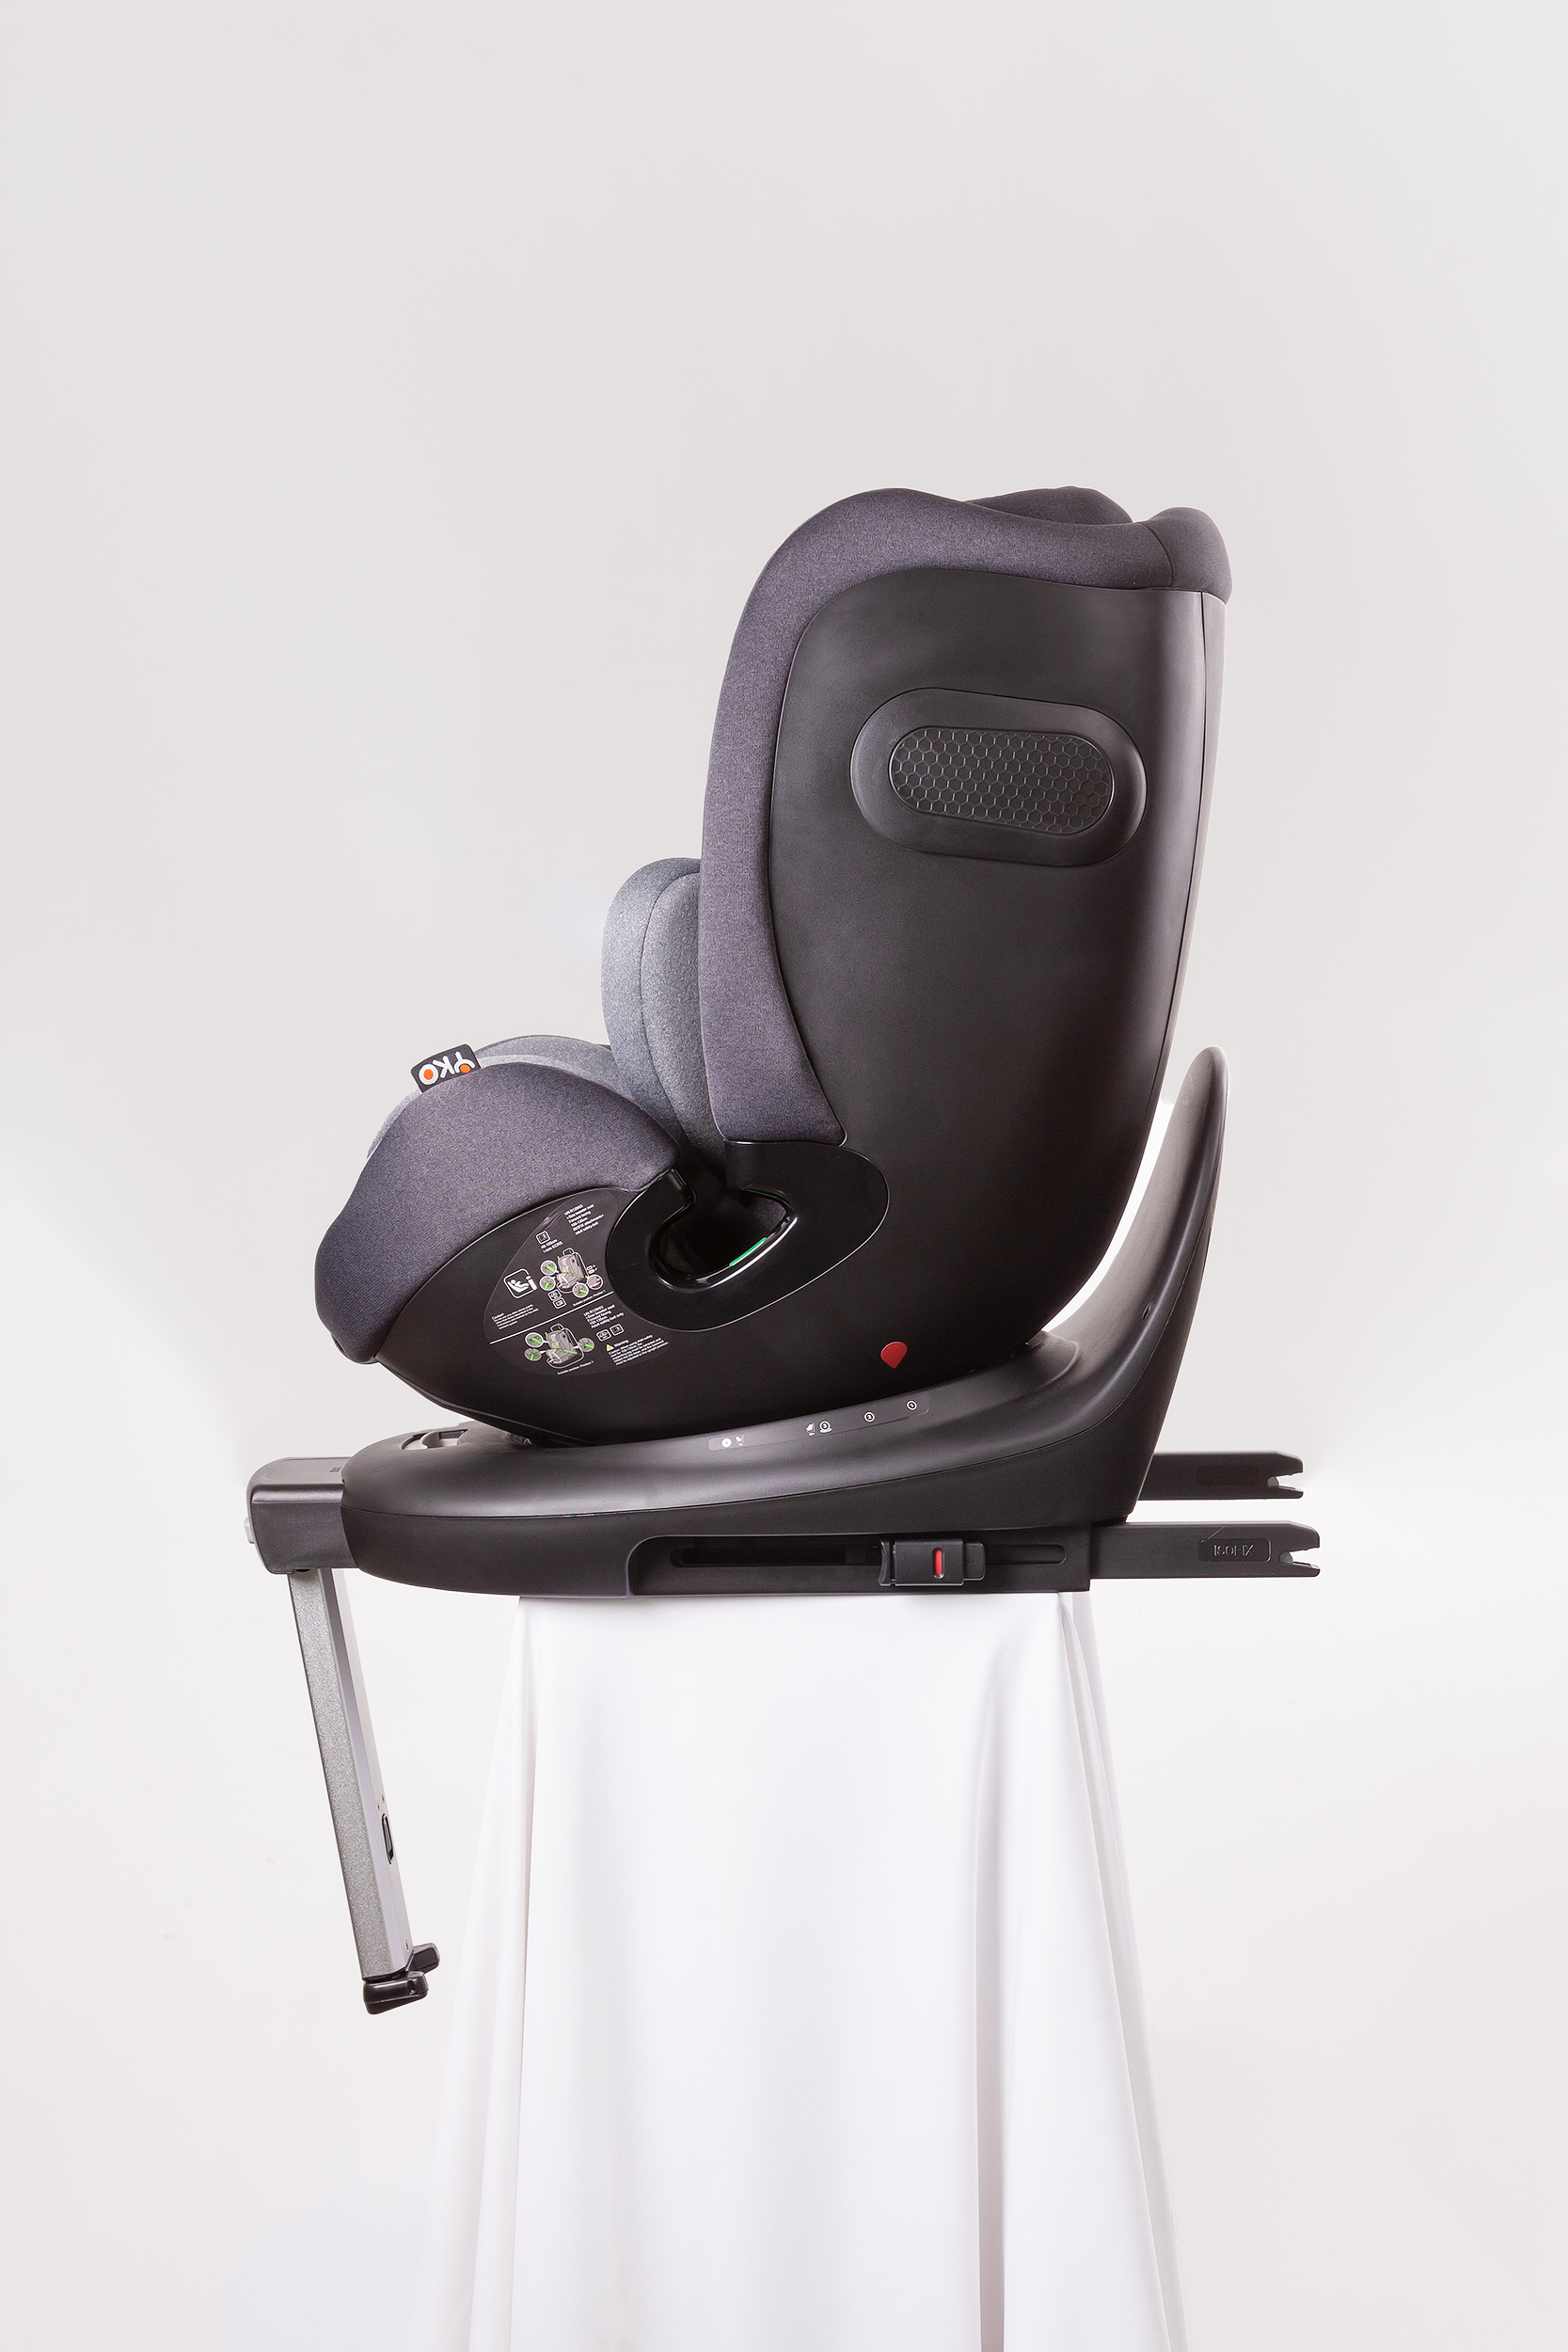 360 swivel car seat with isofix